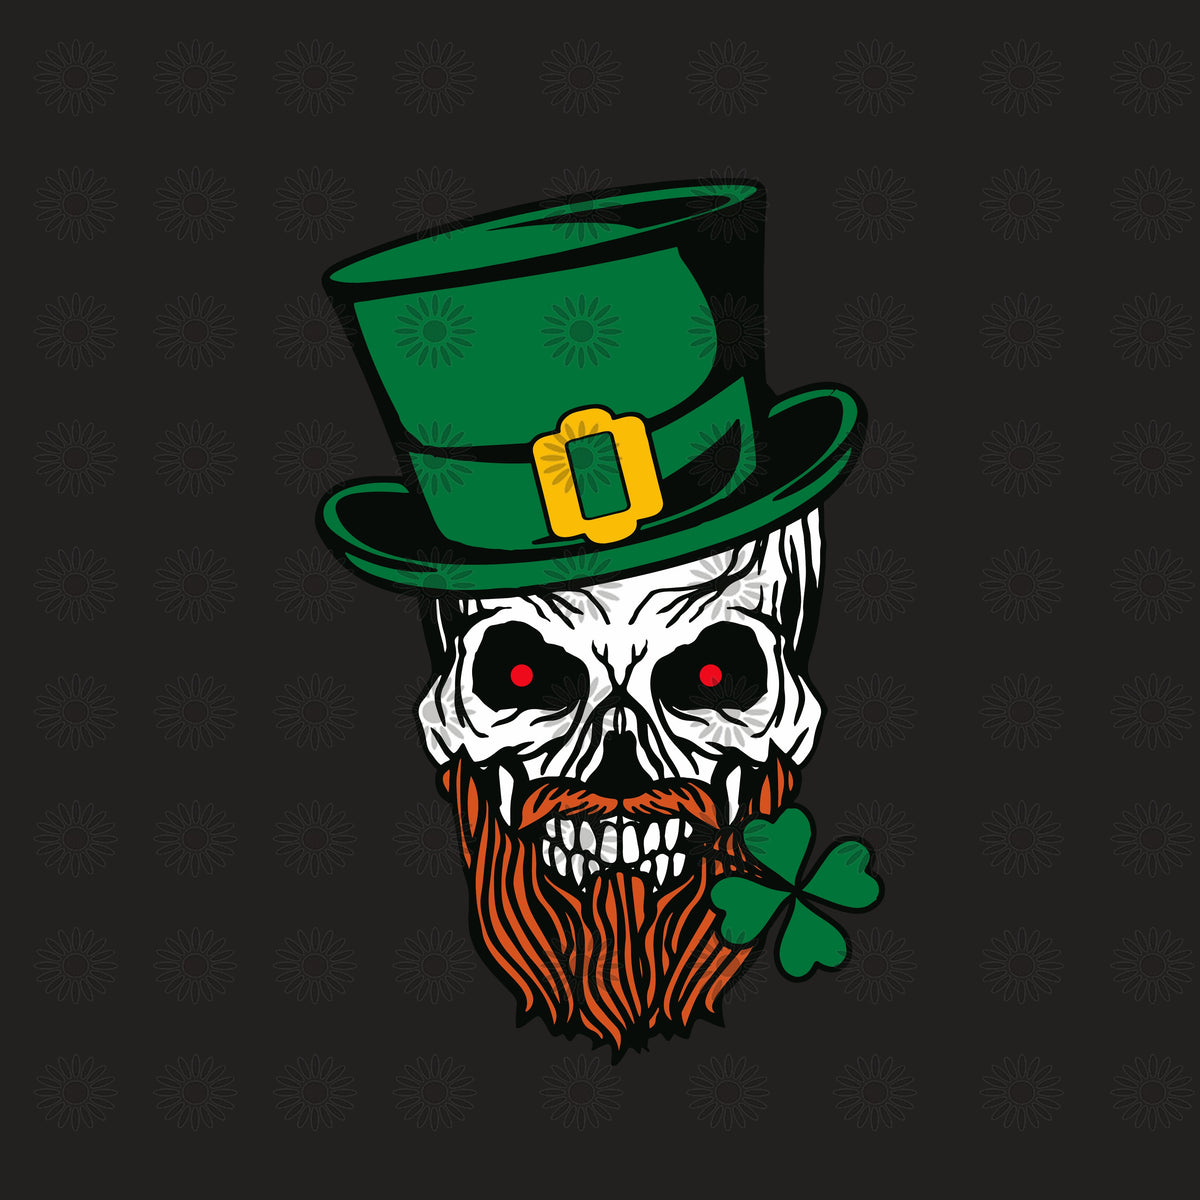 22 by 24-Inch 3dRose apr_22363_2 Saint Patricks Day Cartoon Shamrock with Irish top Hat Medium Length Apron with Pouch Pockets